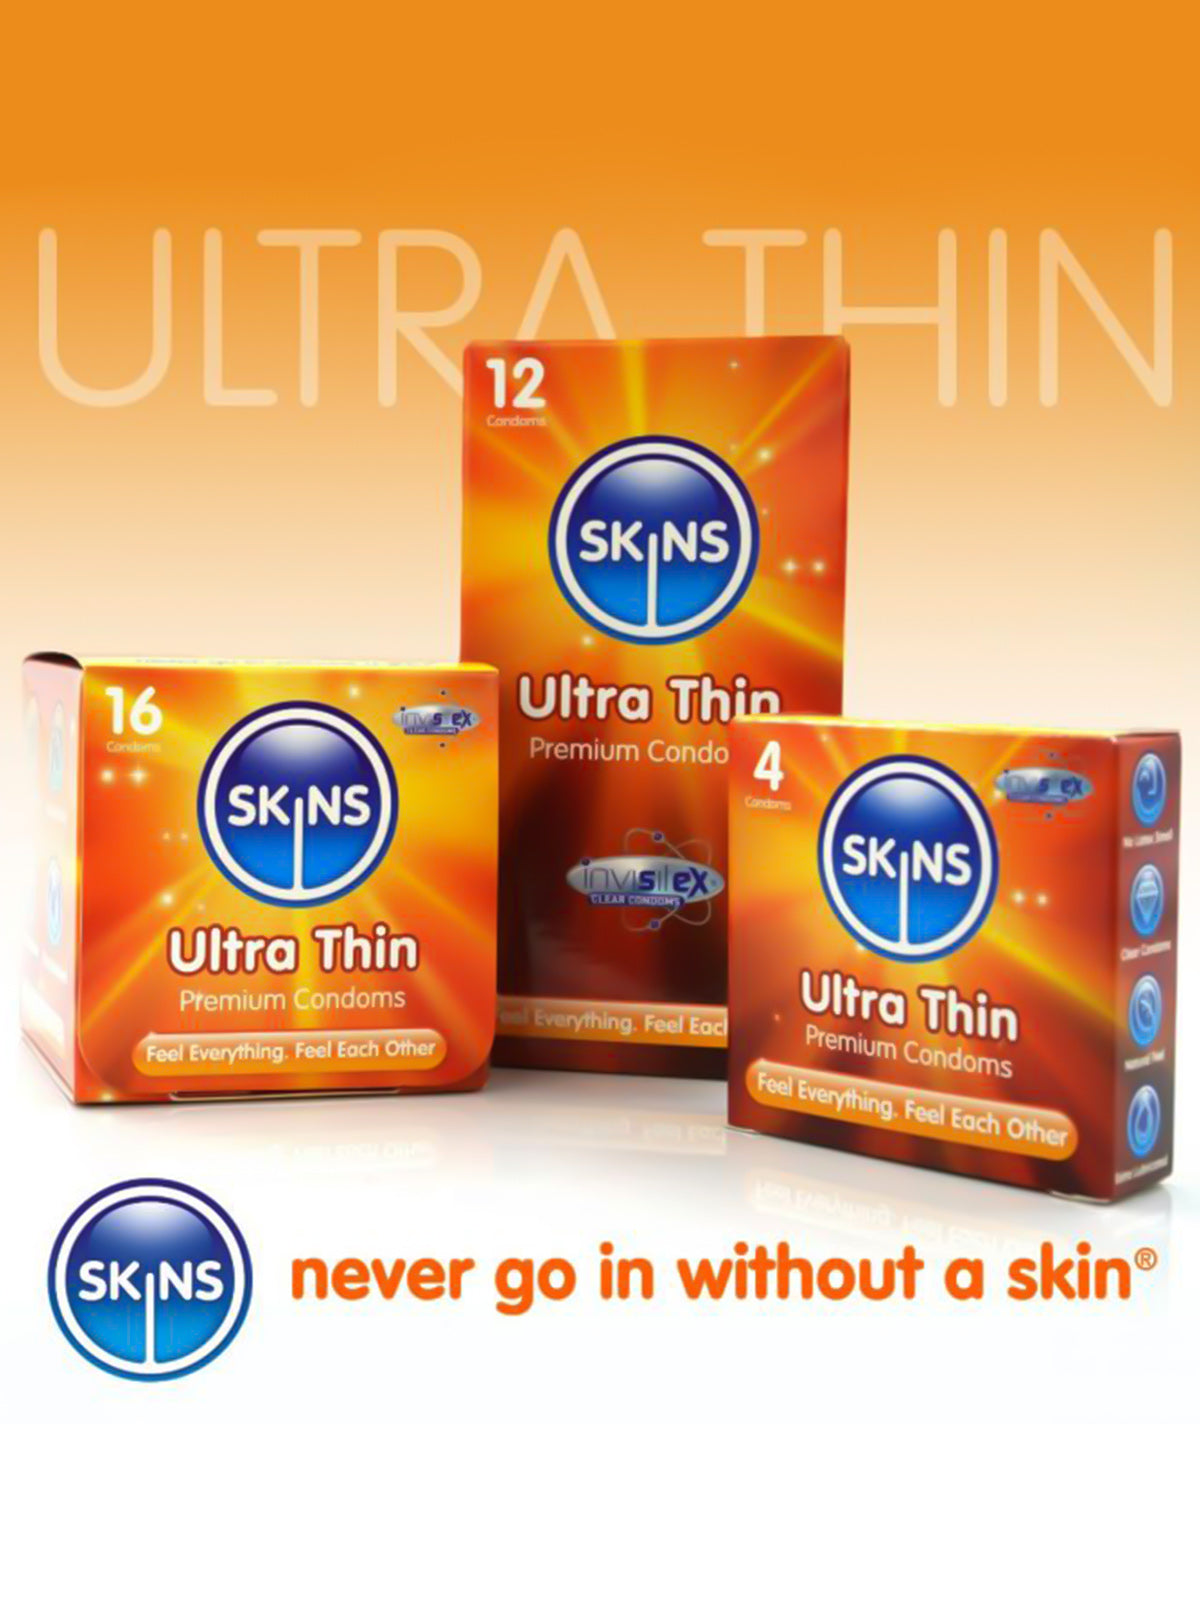 Skins (UK) Condoms Ultra Thin - 4 Pack